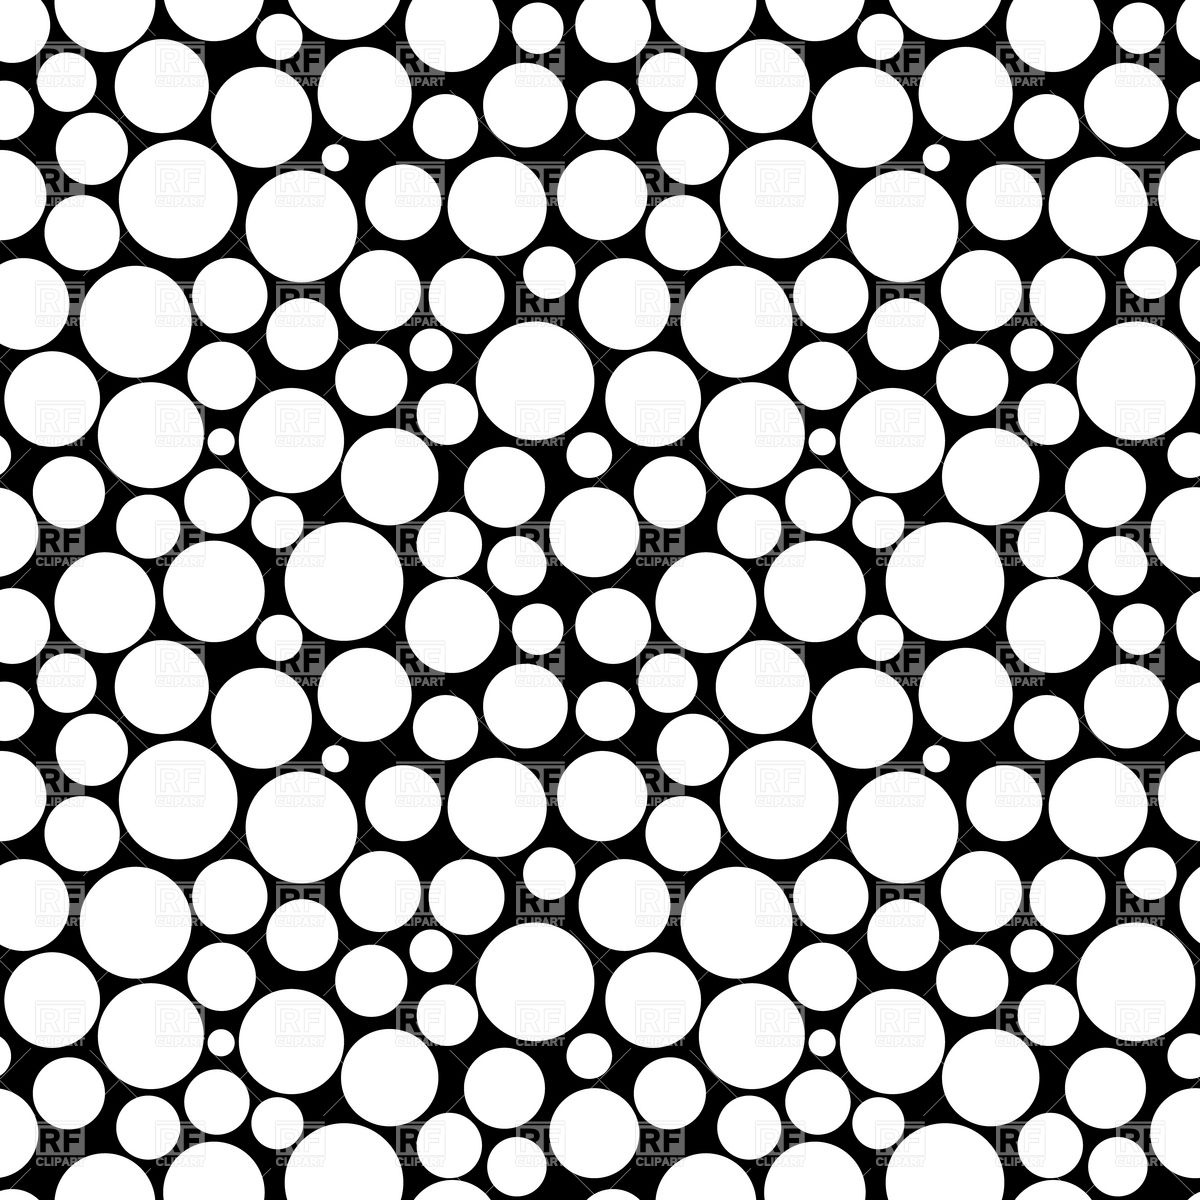 Black White Polka Dot Background Clip Art